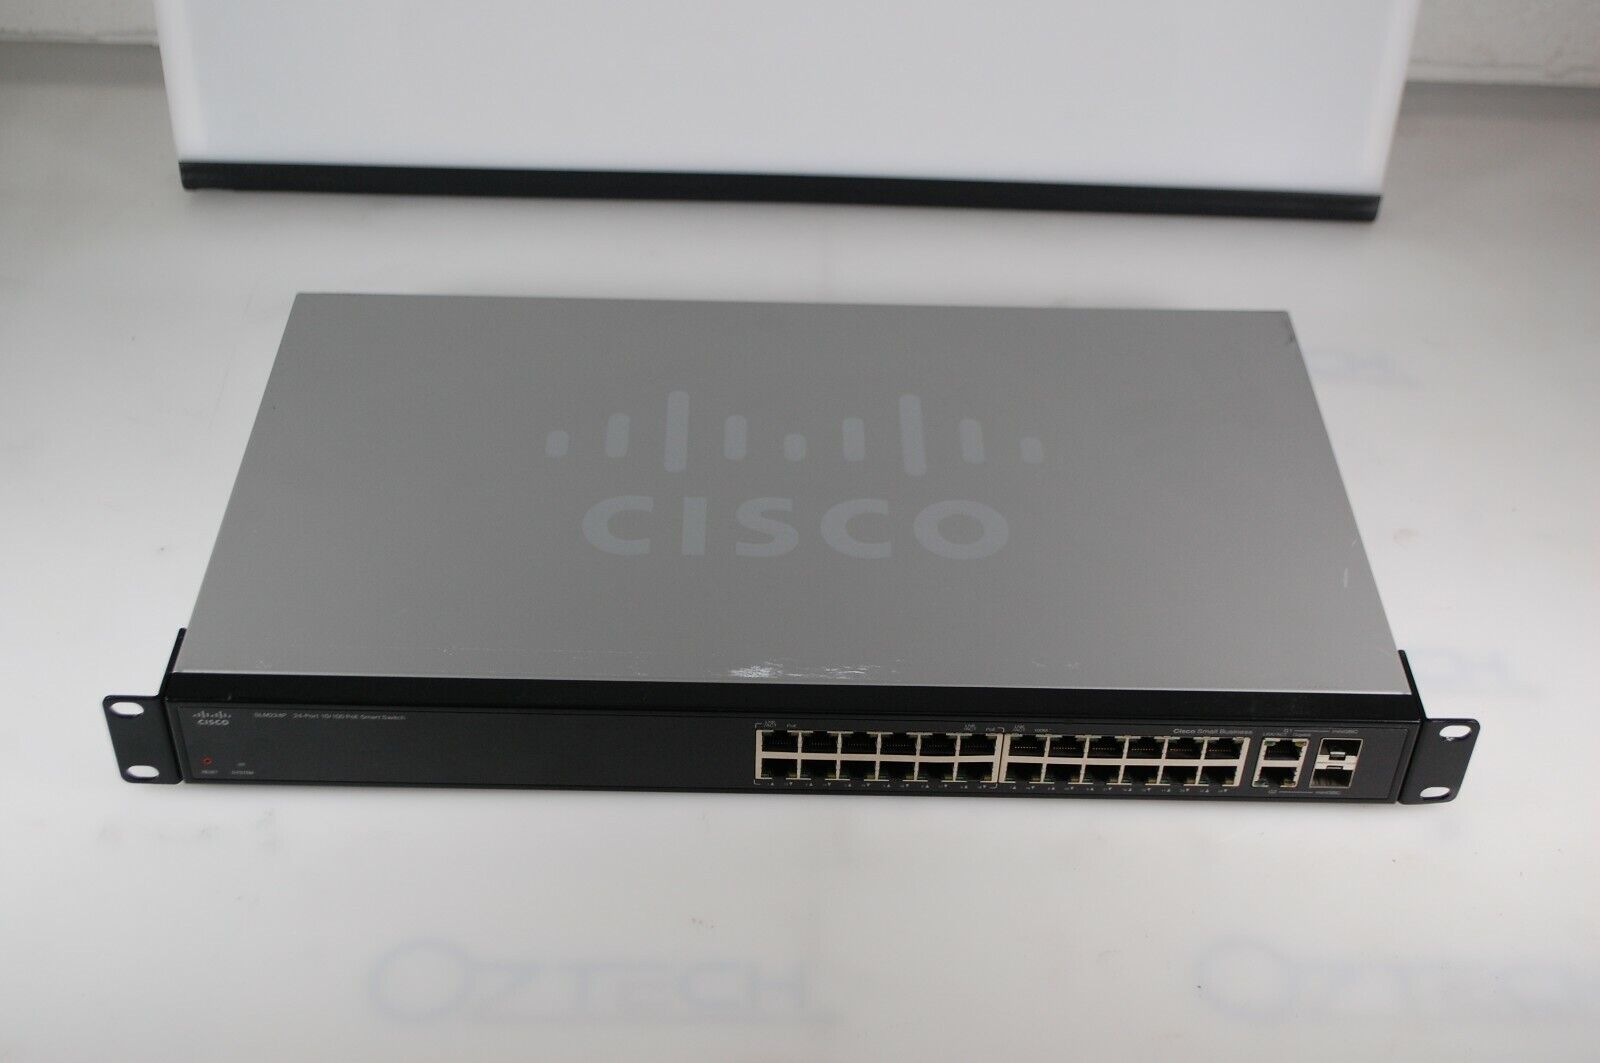 Cisco SLM224P 24-Port 10/100 PoE Smart Switch